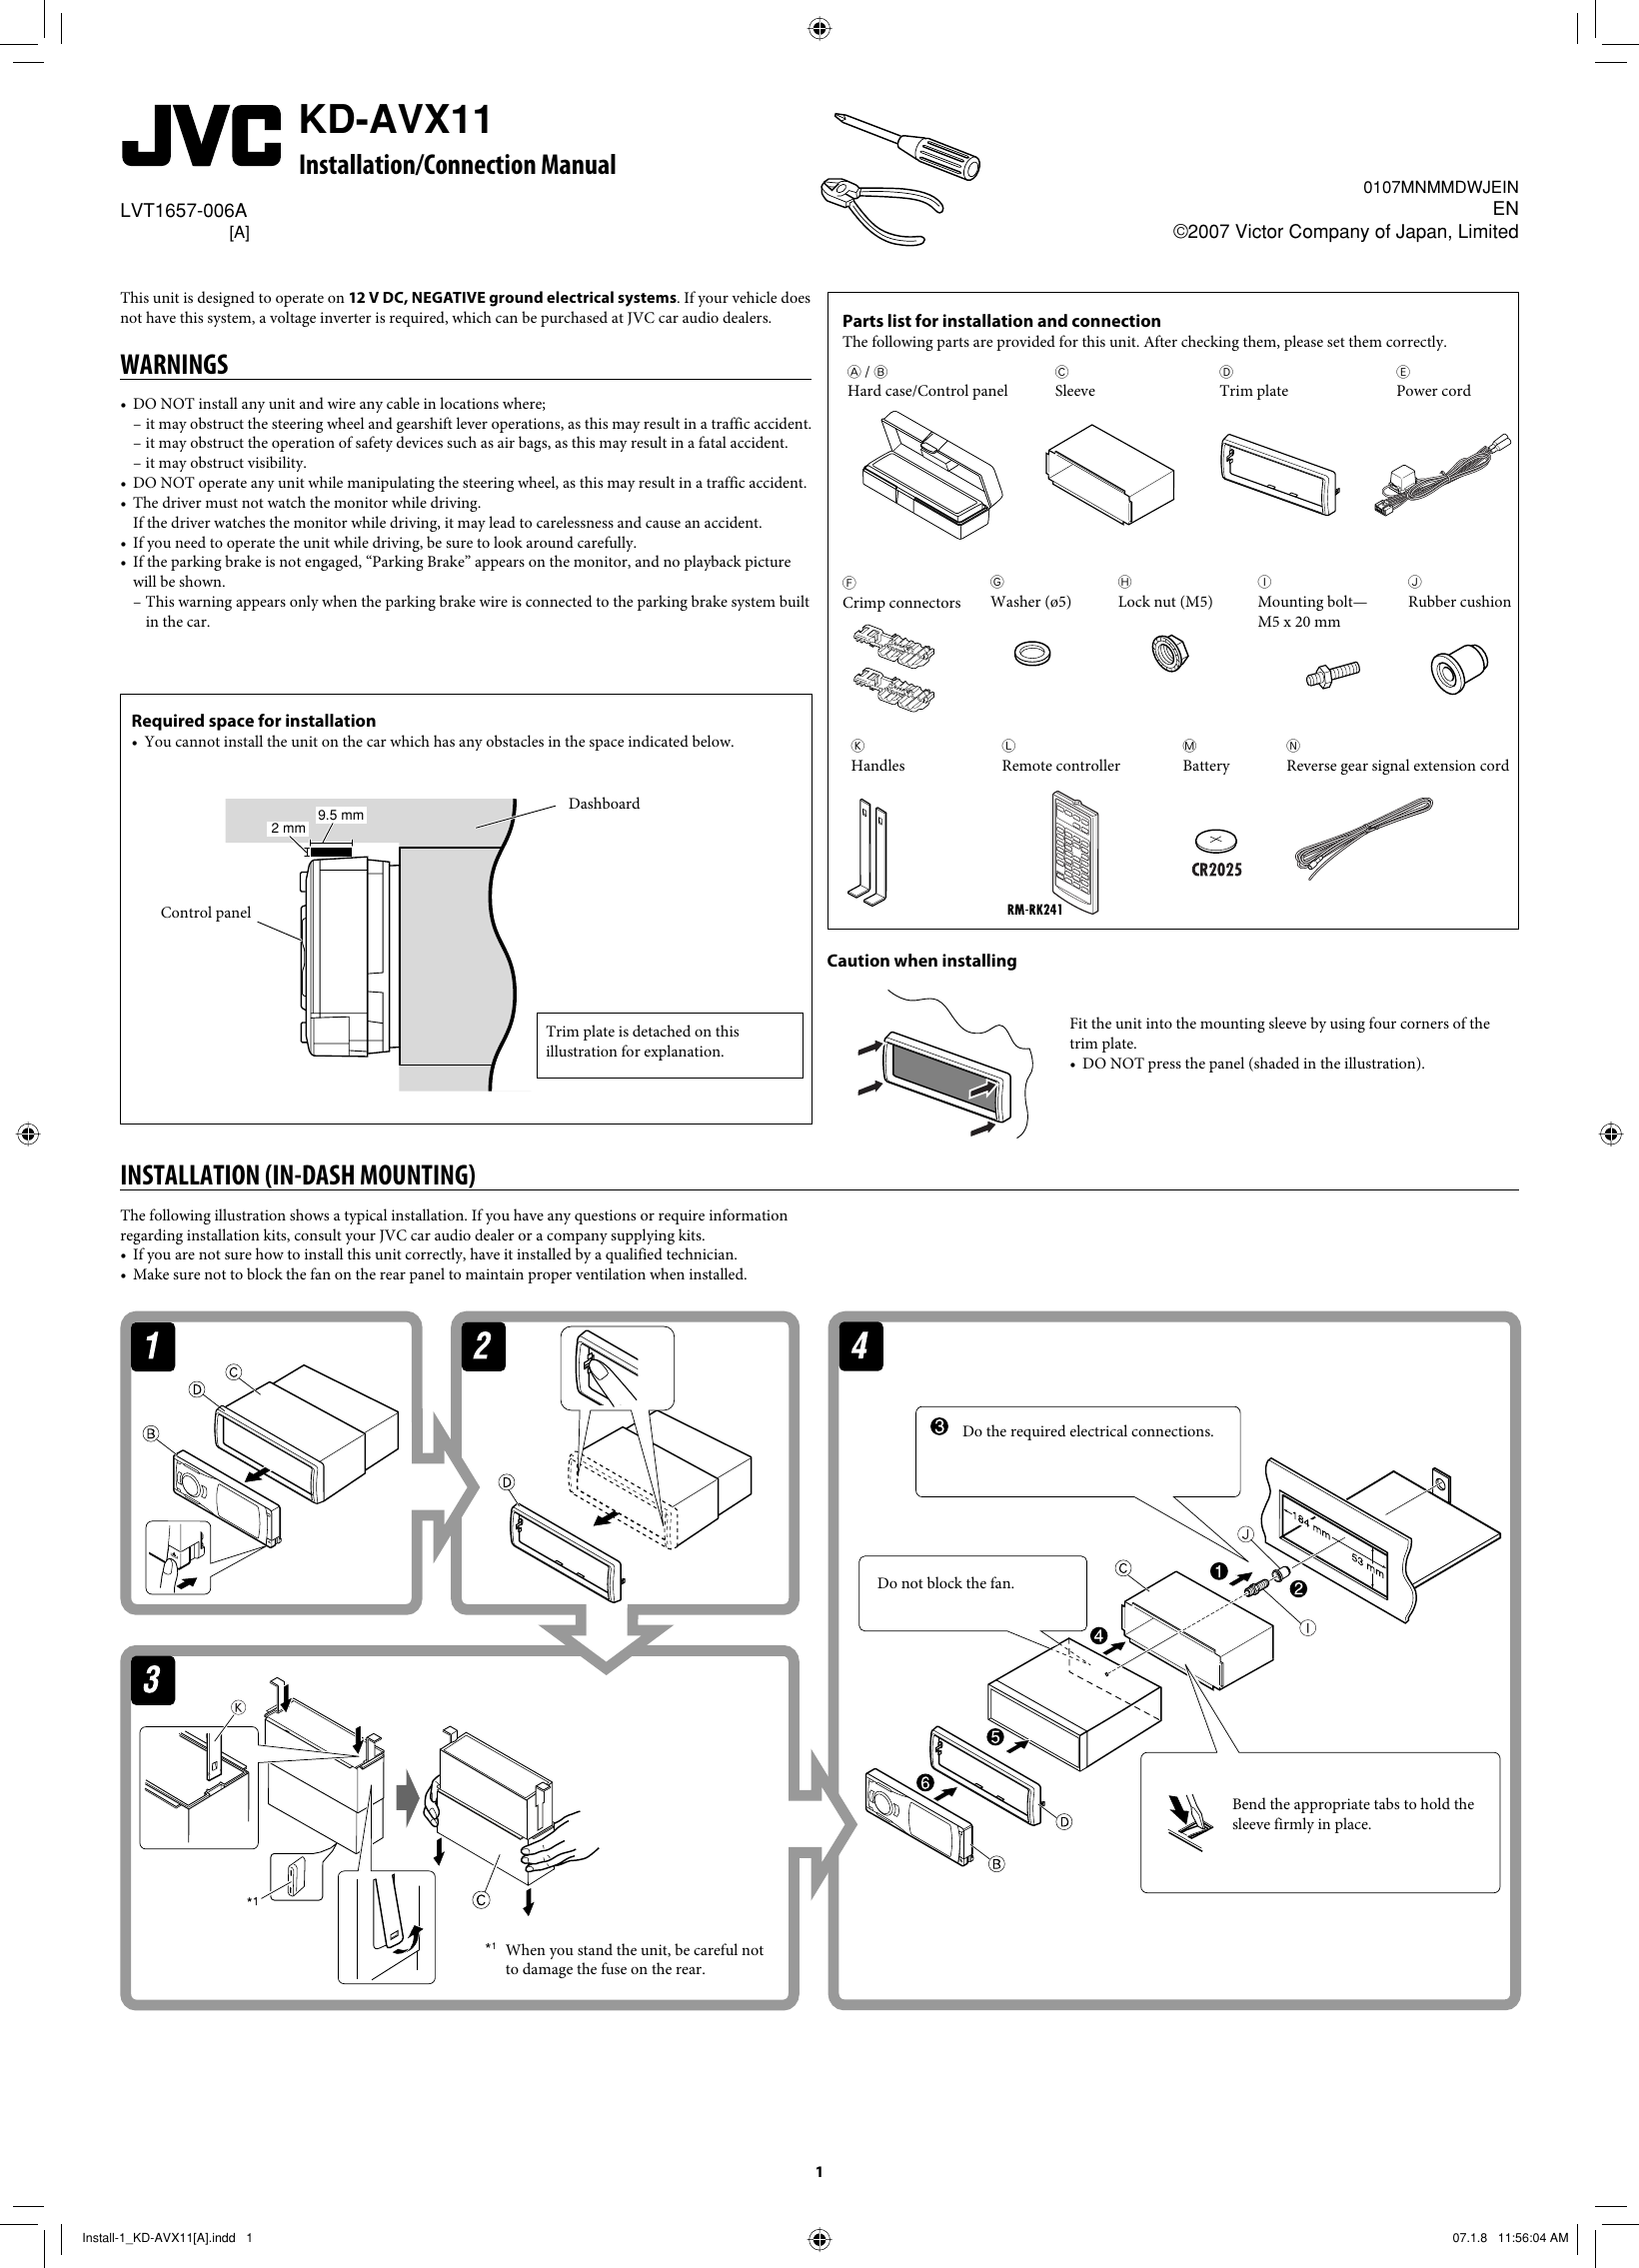 Page 1 of 4 - JVC KD-AVX11A KD-AVX11 Installation [A] User Manual LVT1657-006A